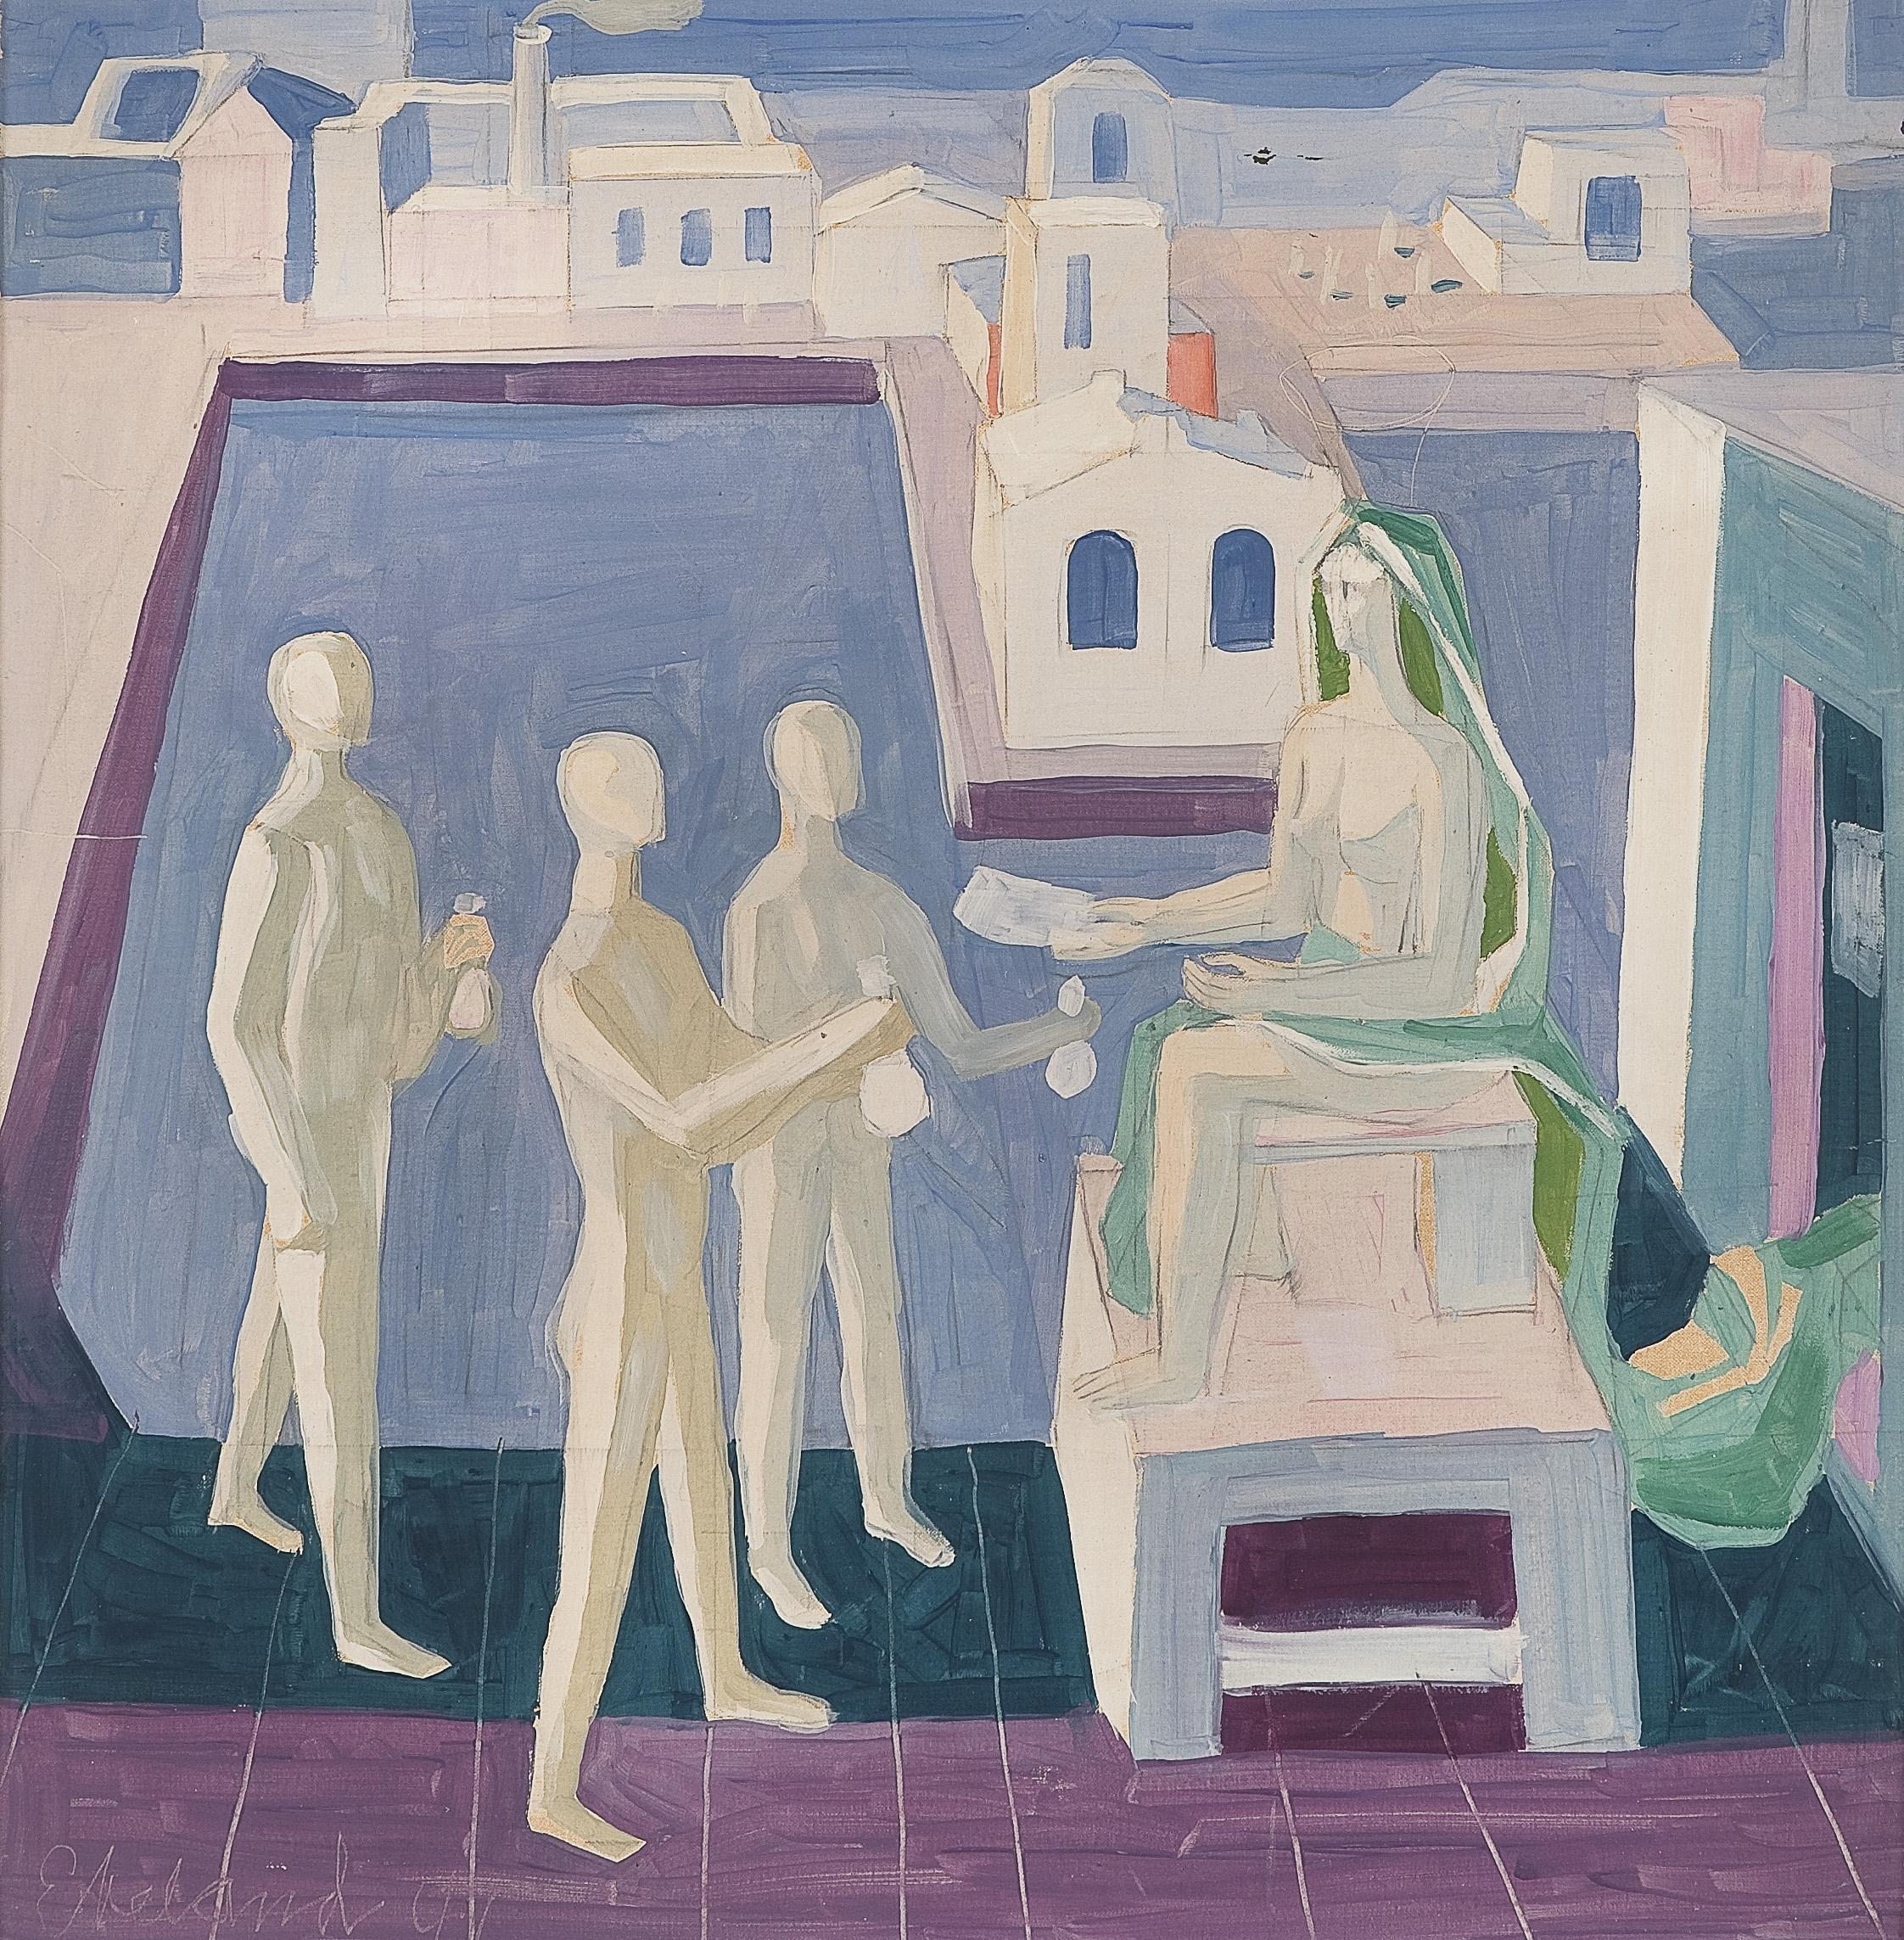 Figures in a City Landscape by Arne Ekeland, 1941